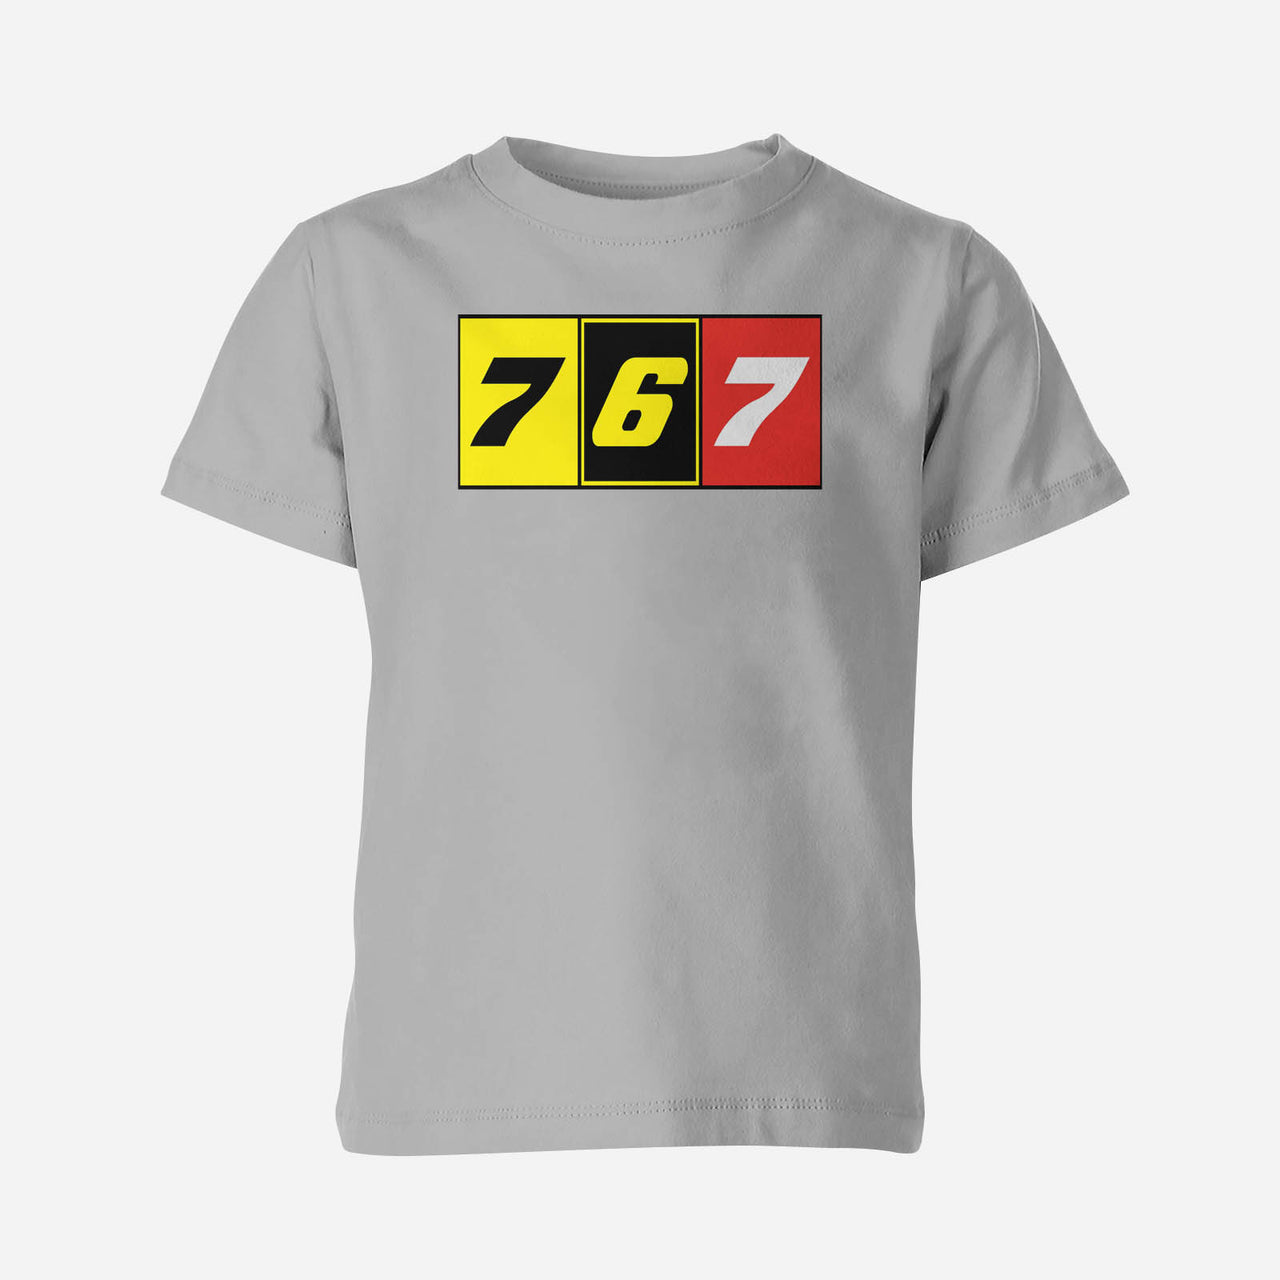 Flat Colourful 767 Designed Children T-Shirts